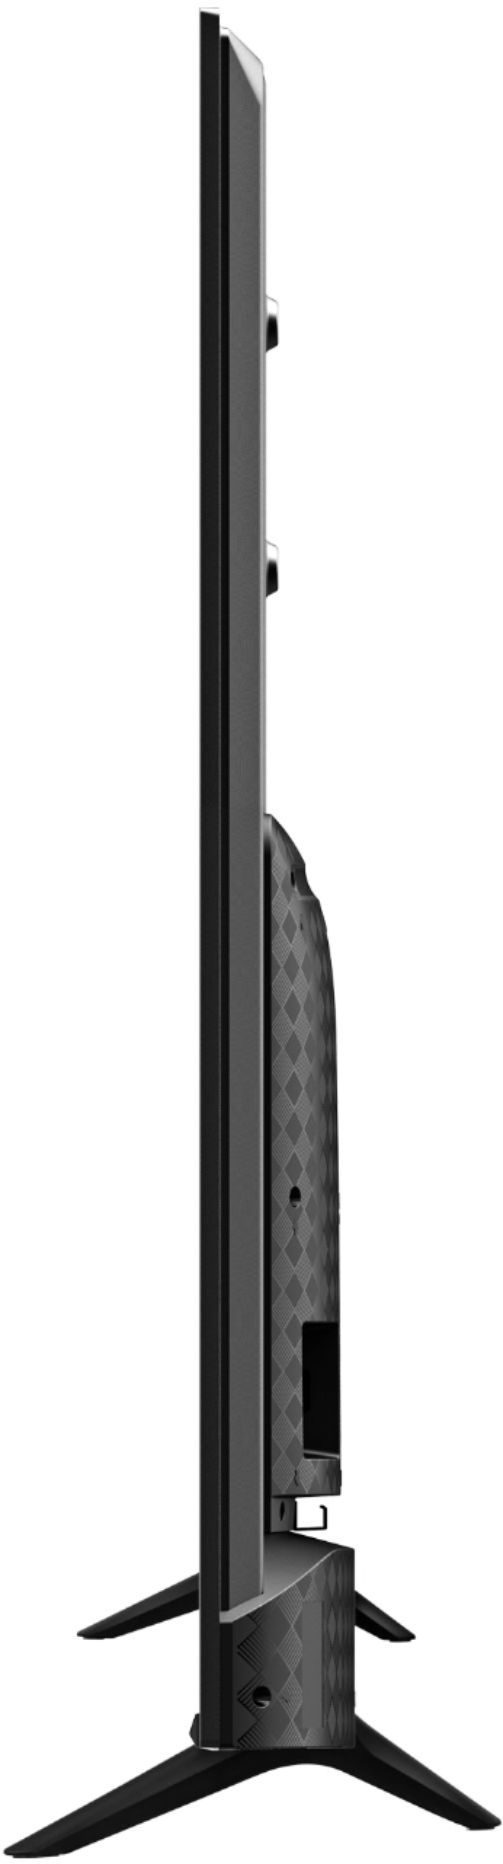 Hisense 50 Class U6 Series Quantum Uled 4k Uhd Hdr Smart Google Tv - 50u6h  : Target